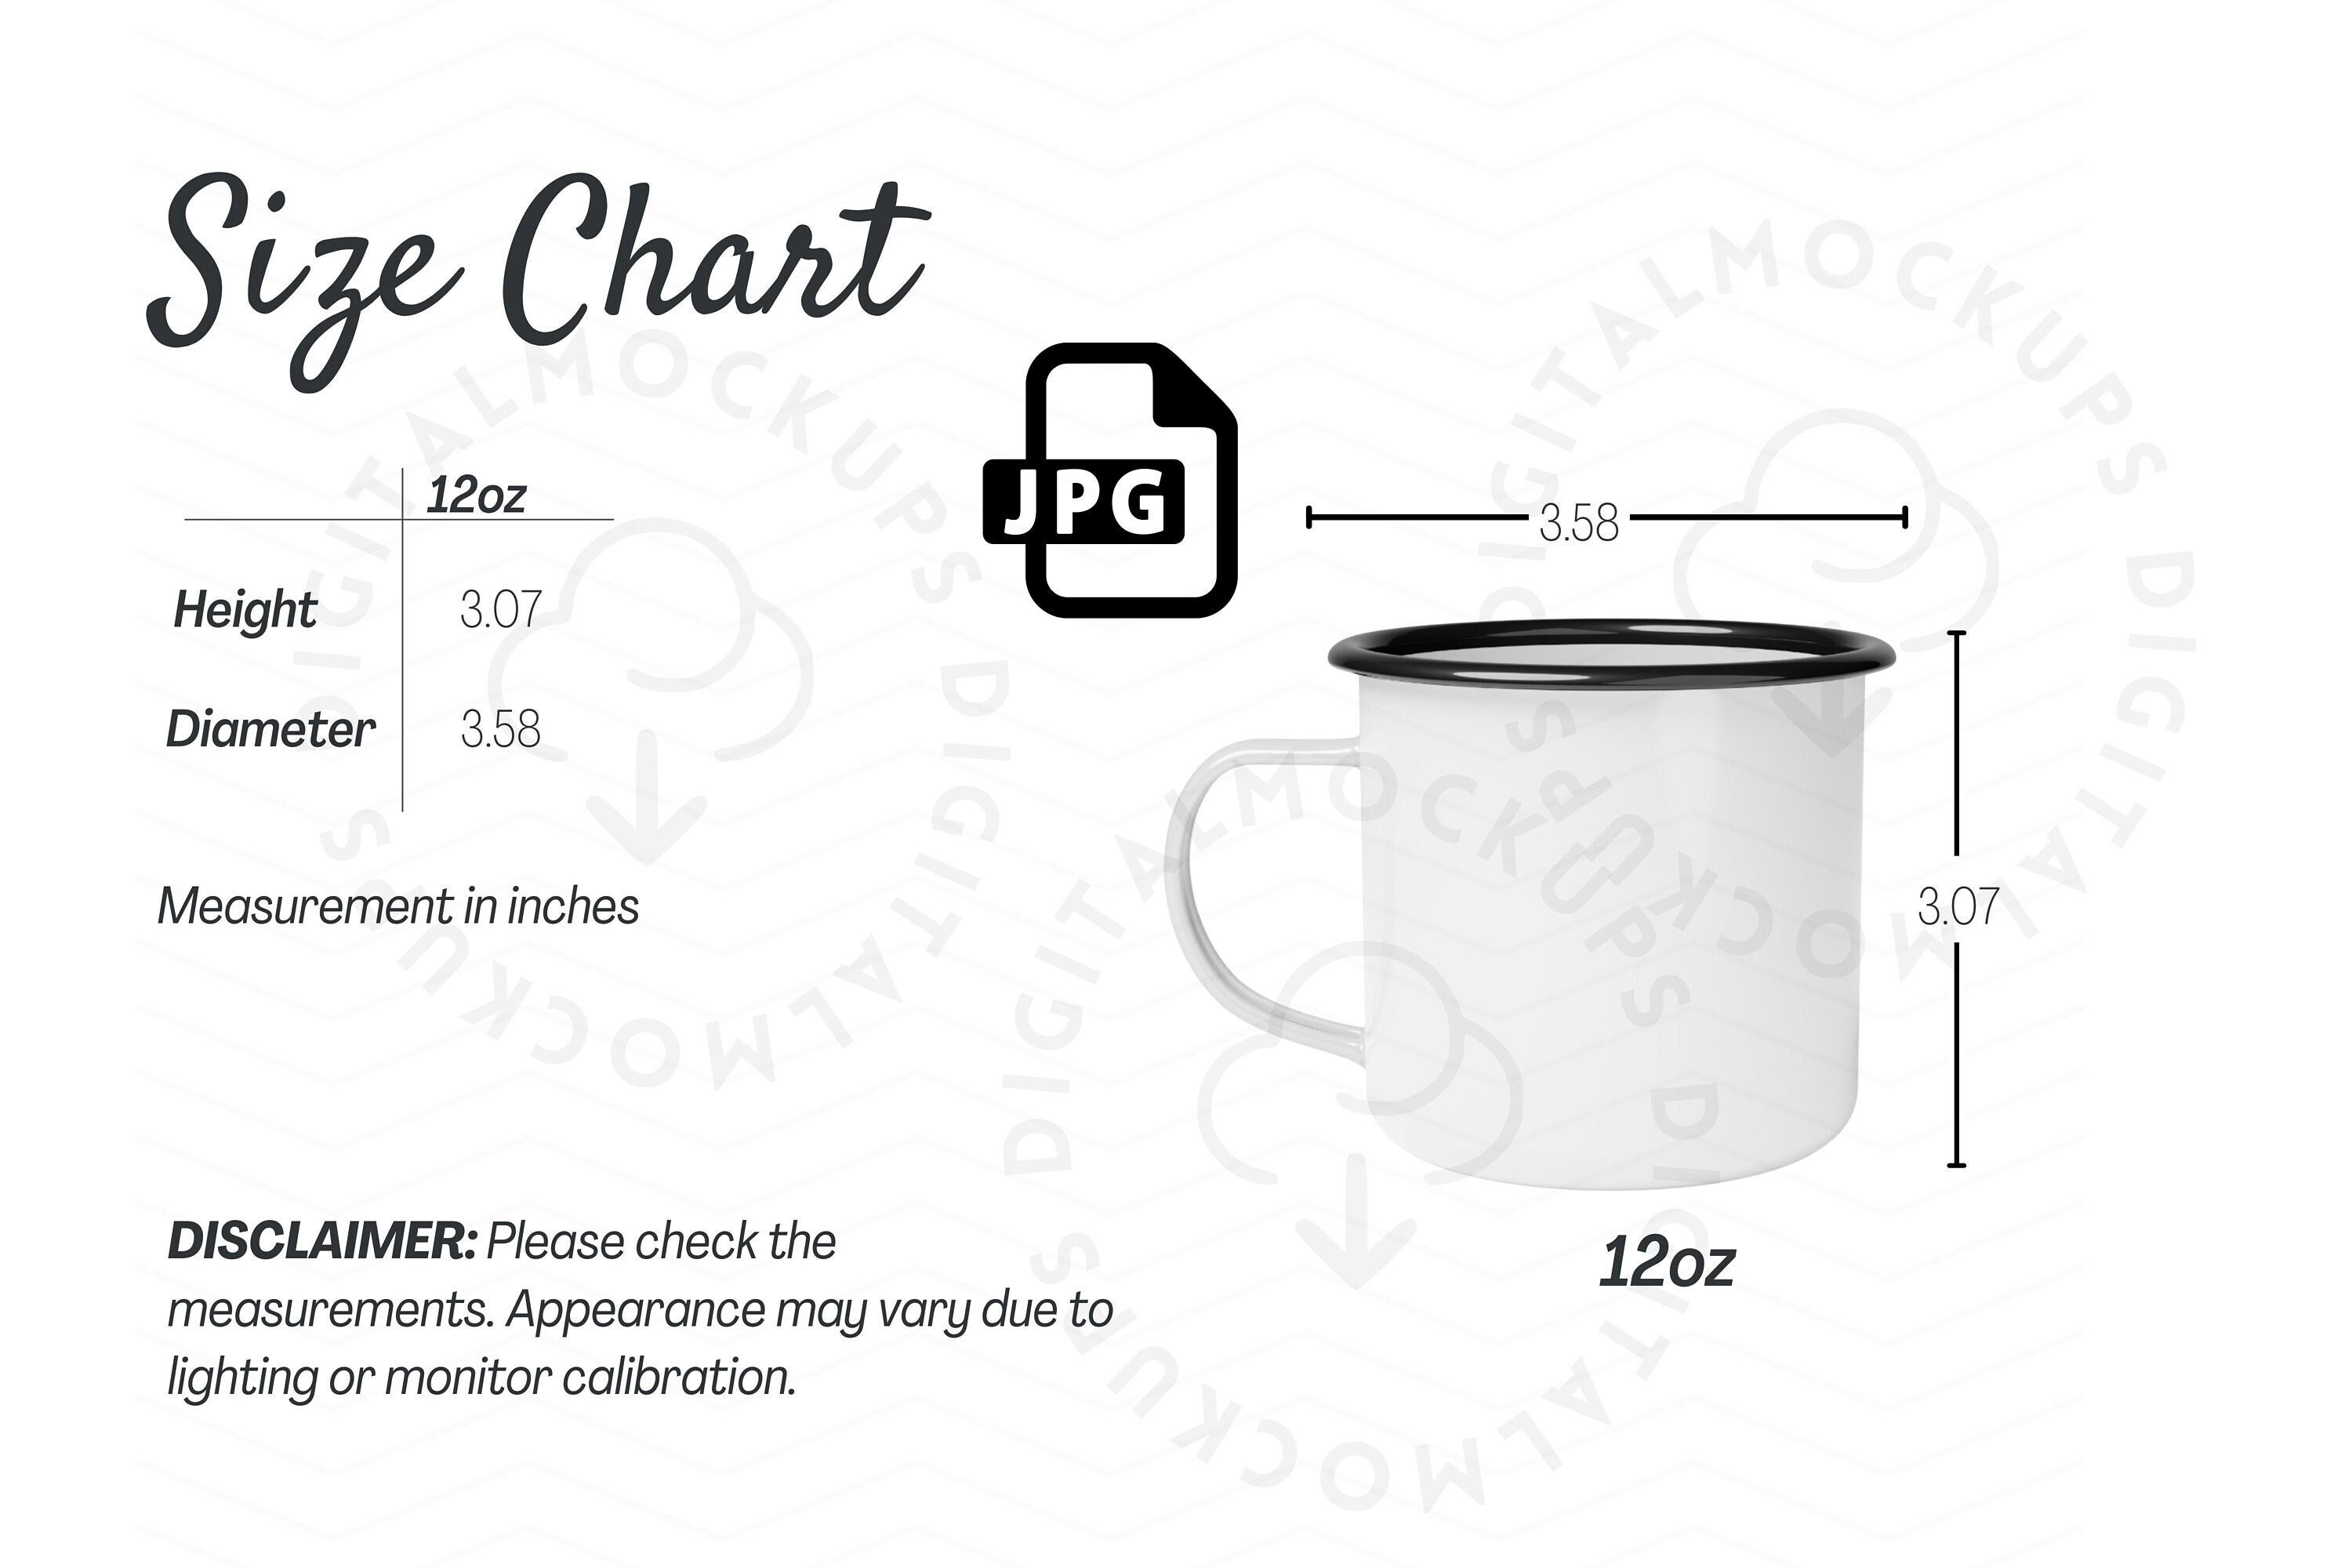 Mug Size Chart-cup Size Chart Template-11oz-15oz-mug Size Chart-mug  Mockup-fall Mockup-stock Photo Boho Mockup 